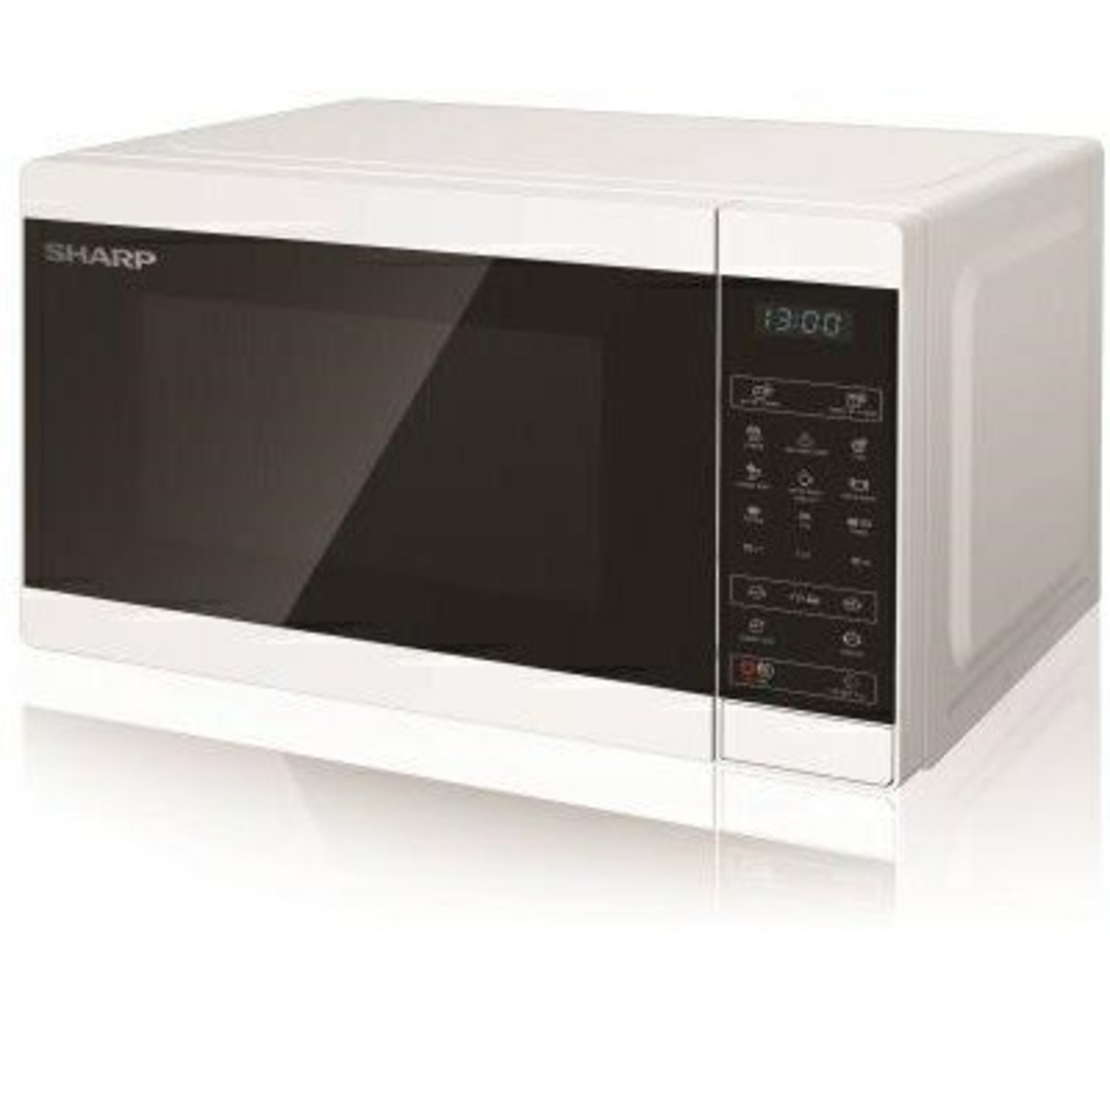 SHARP microwave R709